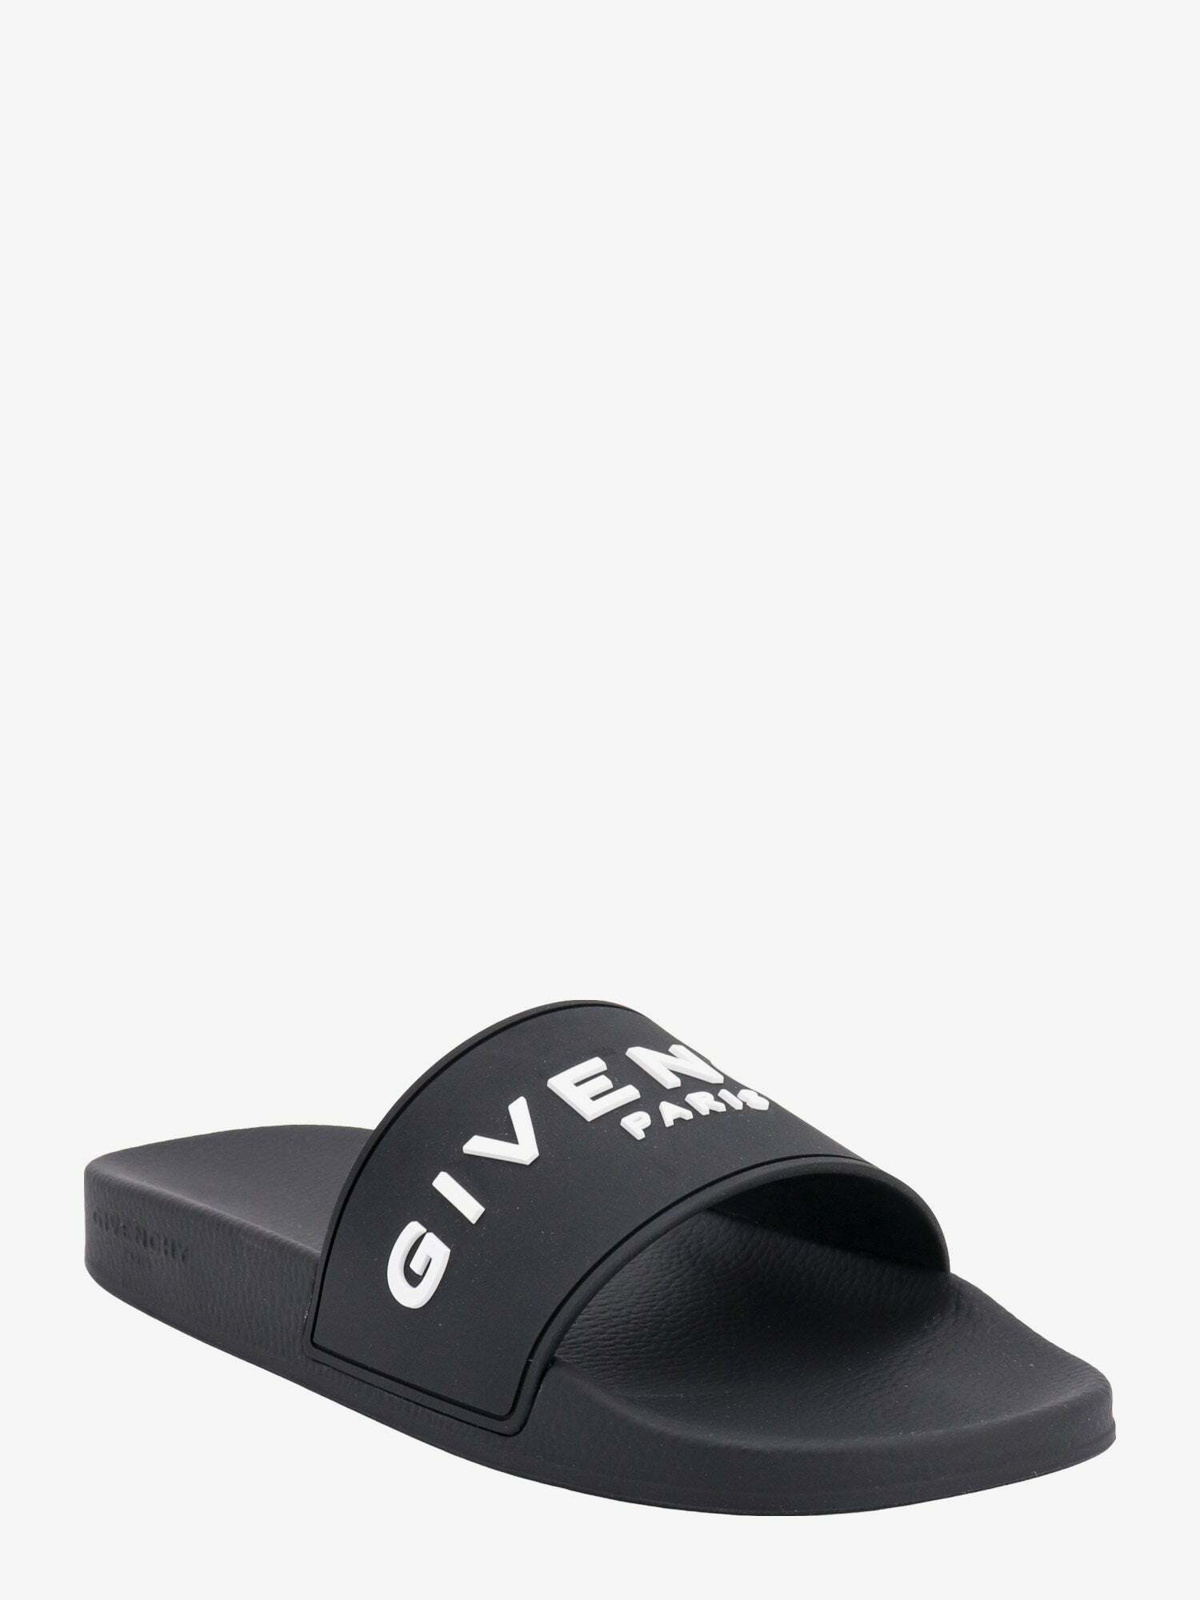 Givenchy Slide Black Mens Givenchy